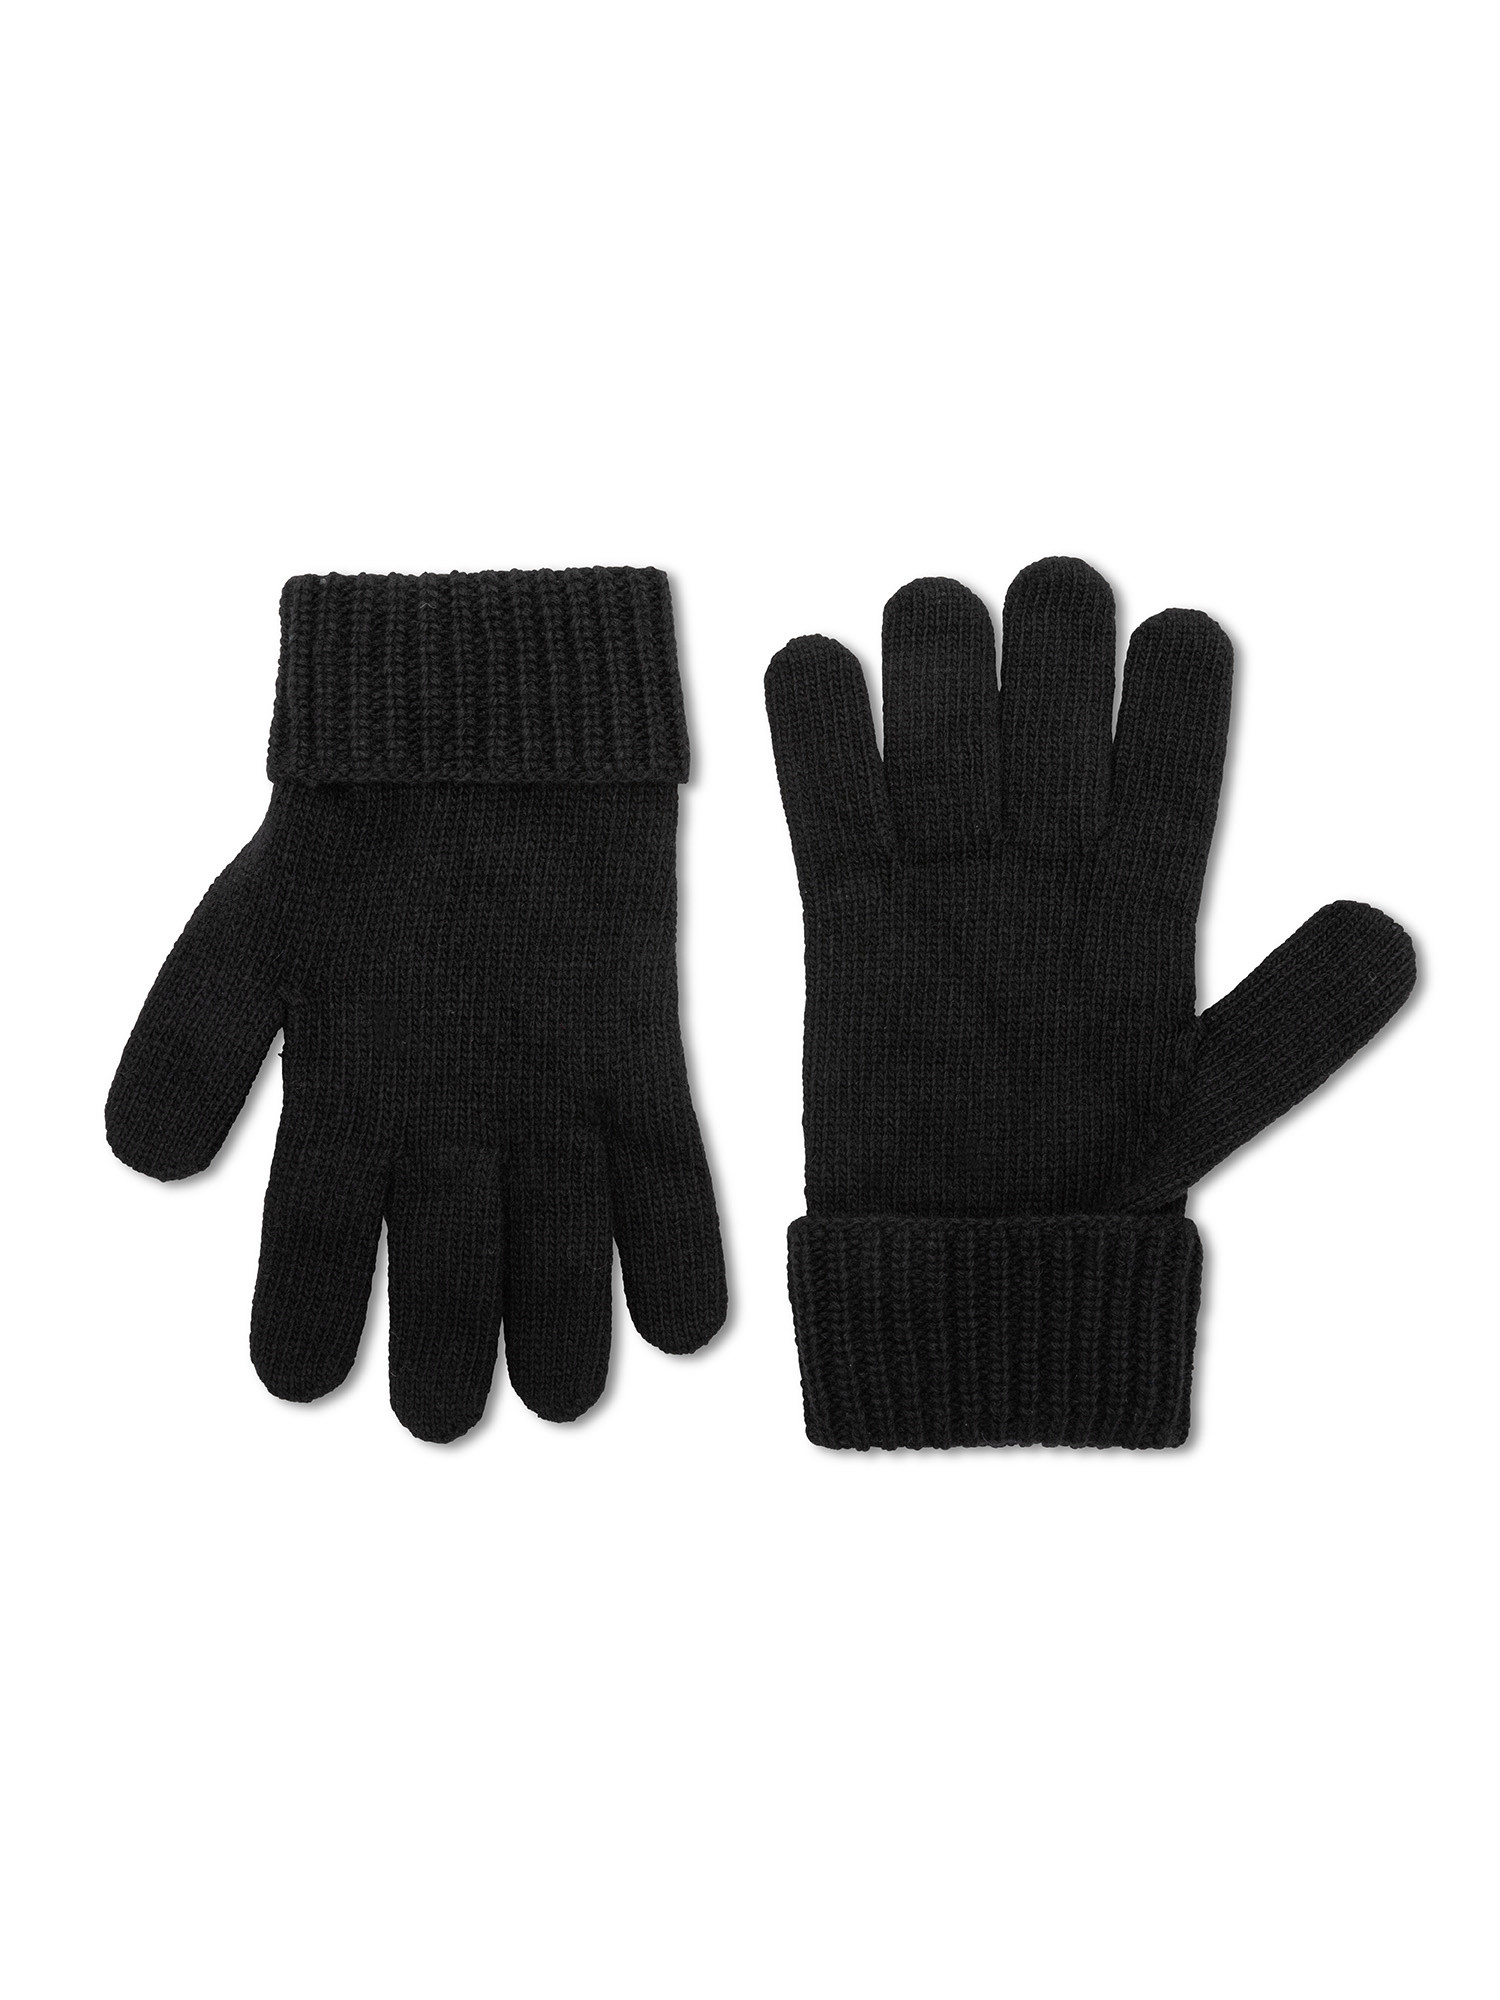 Armani Exchange - Gloves in recycled wool blend, Black, large image number 0